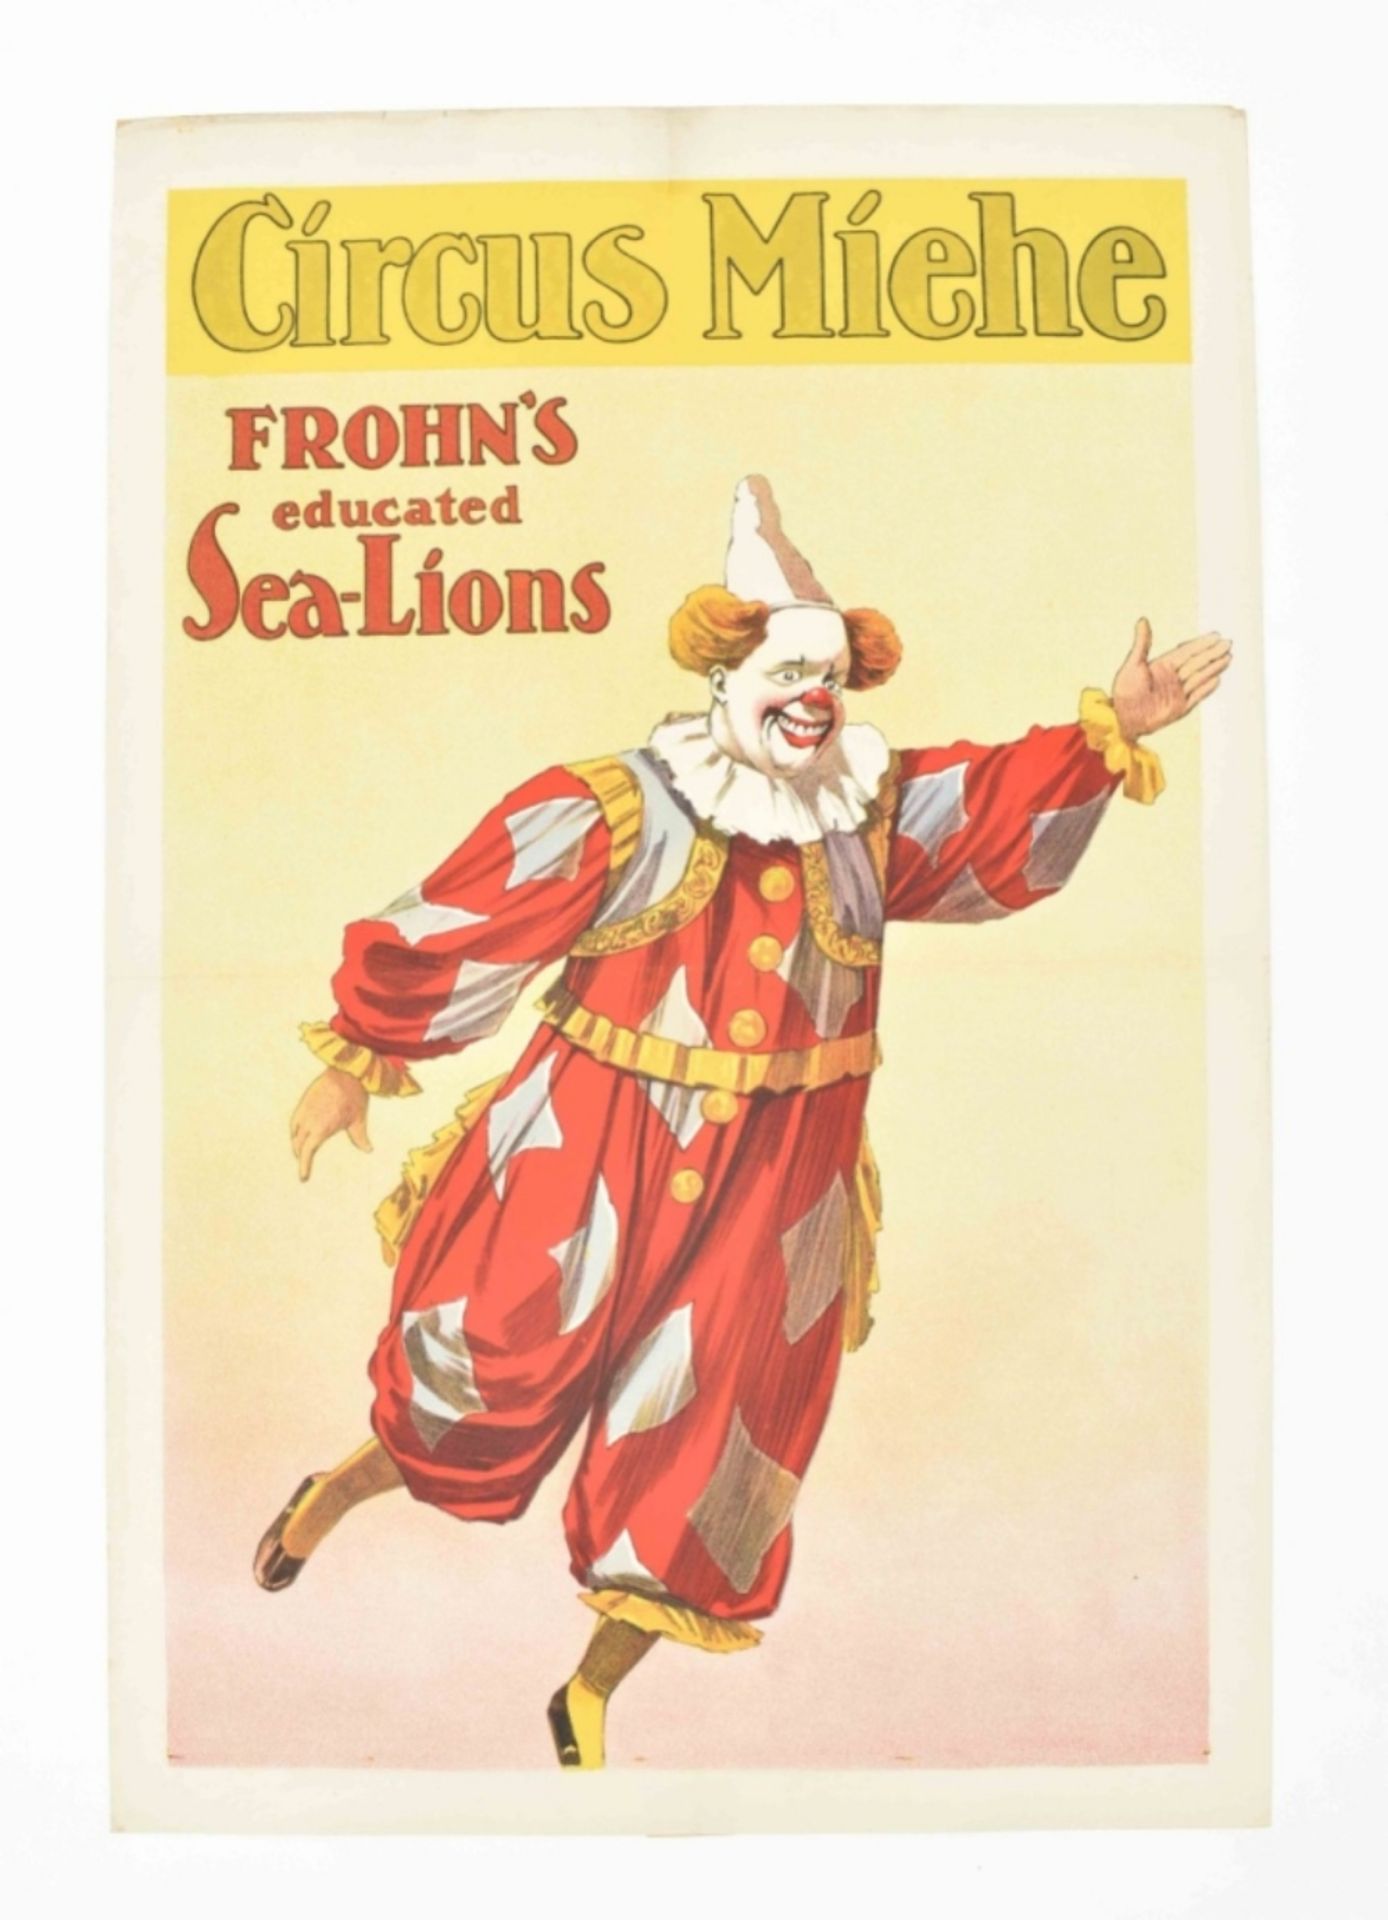 [Clowns] [Acrobatics. Sea lions. Circus Miehe] Educated sea-lions Friedländer, Hamburg, 1914 - Image 2 of 6